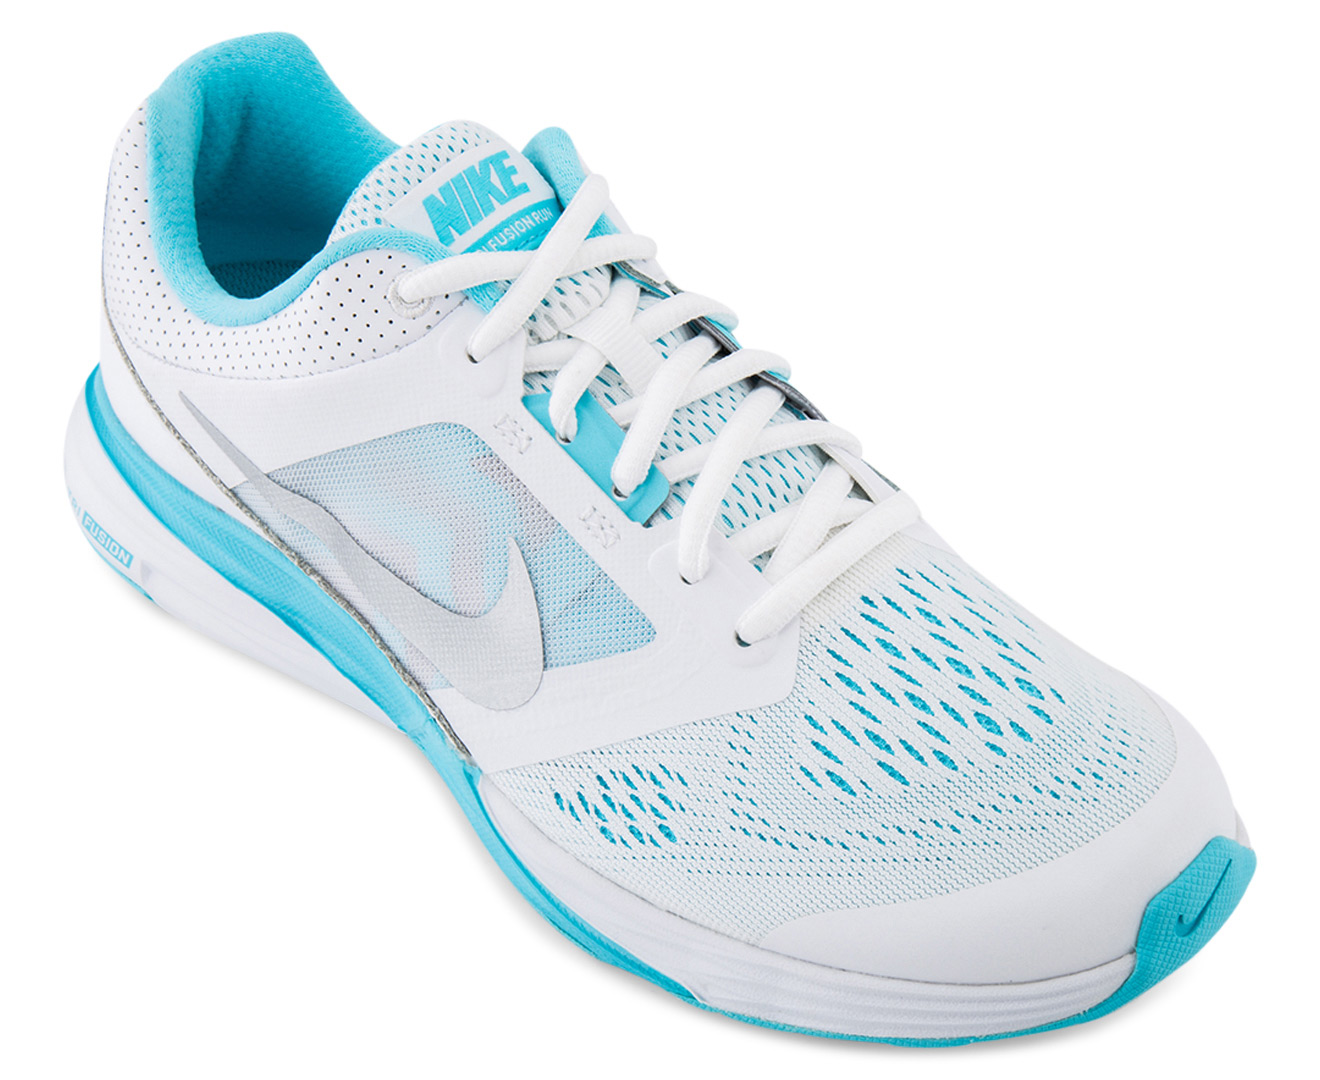 Nike Tri Fusion Run Women's Shoe - White/Metallic Silver/Blue | Catch ...